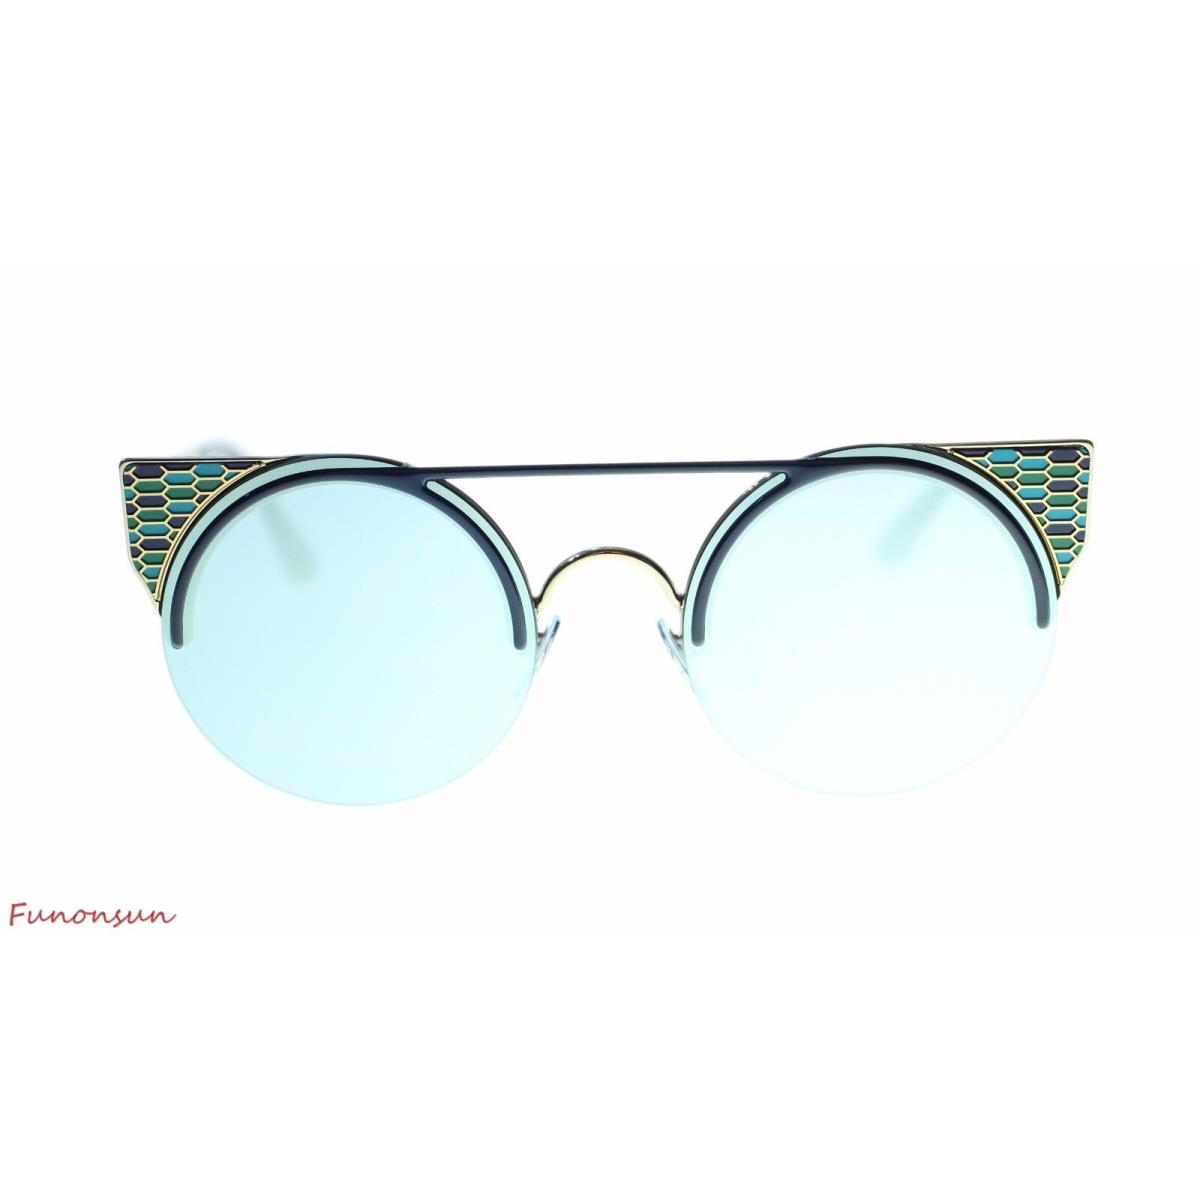 Bvlgari Women`s Round Sunglasses BV6088 20206J Blue Pale/blue Mirror Lens 54mm